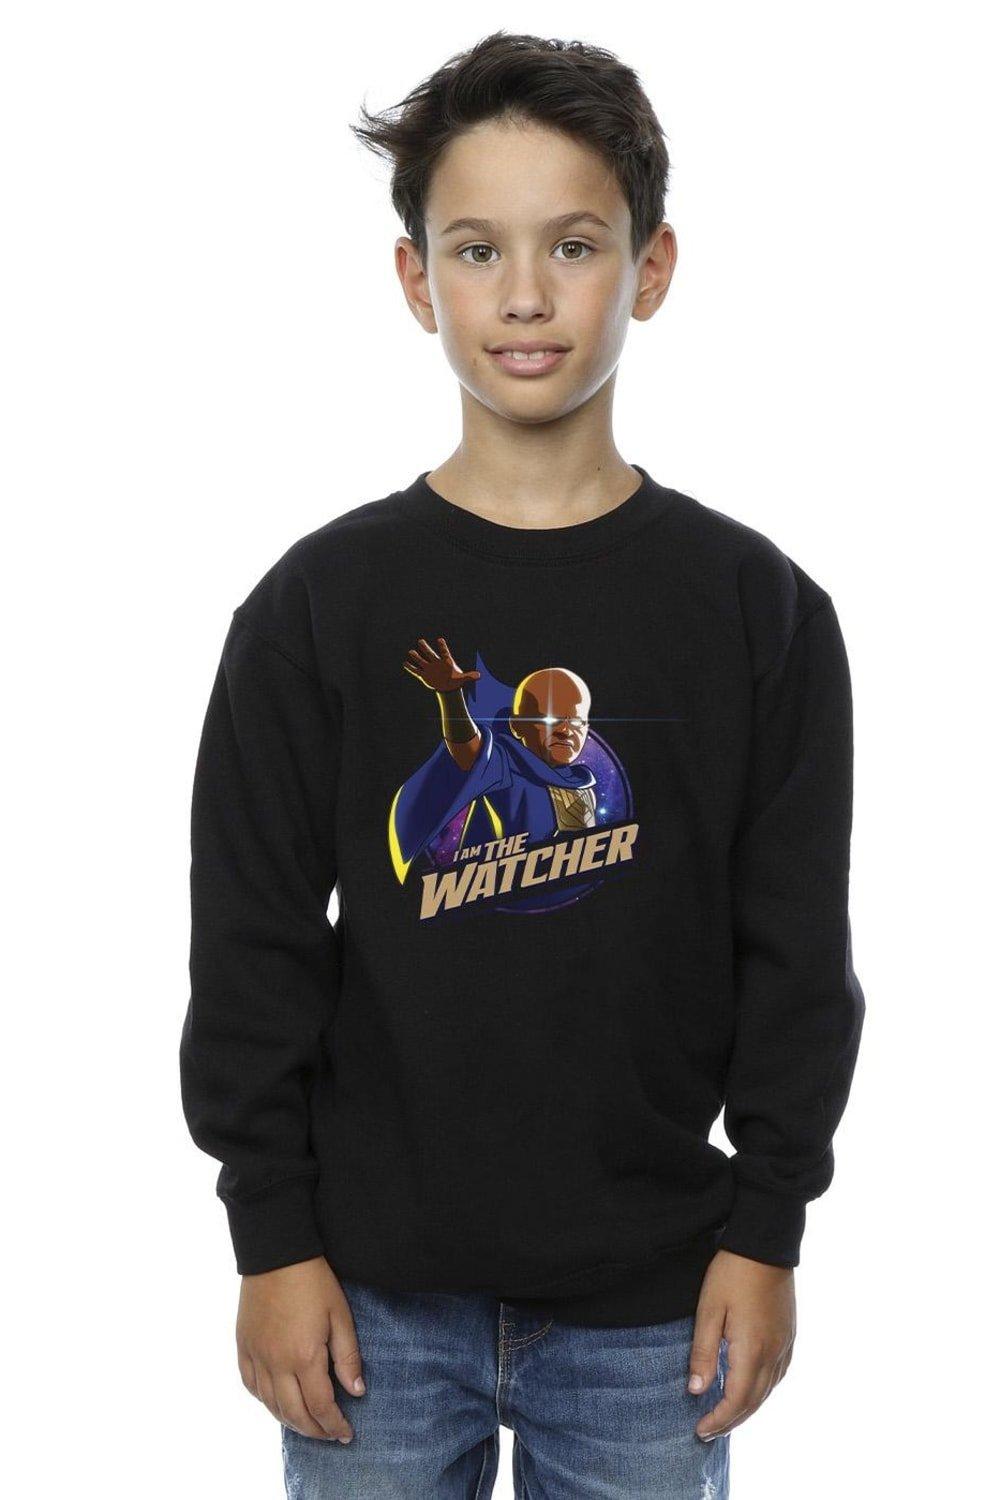 What If The Watcher Sweatshirt